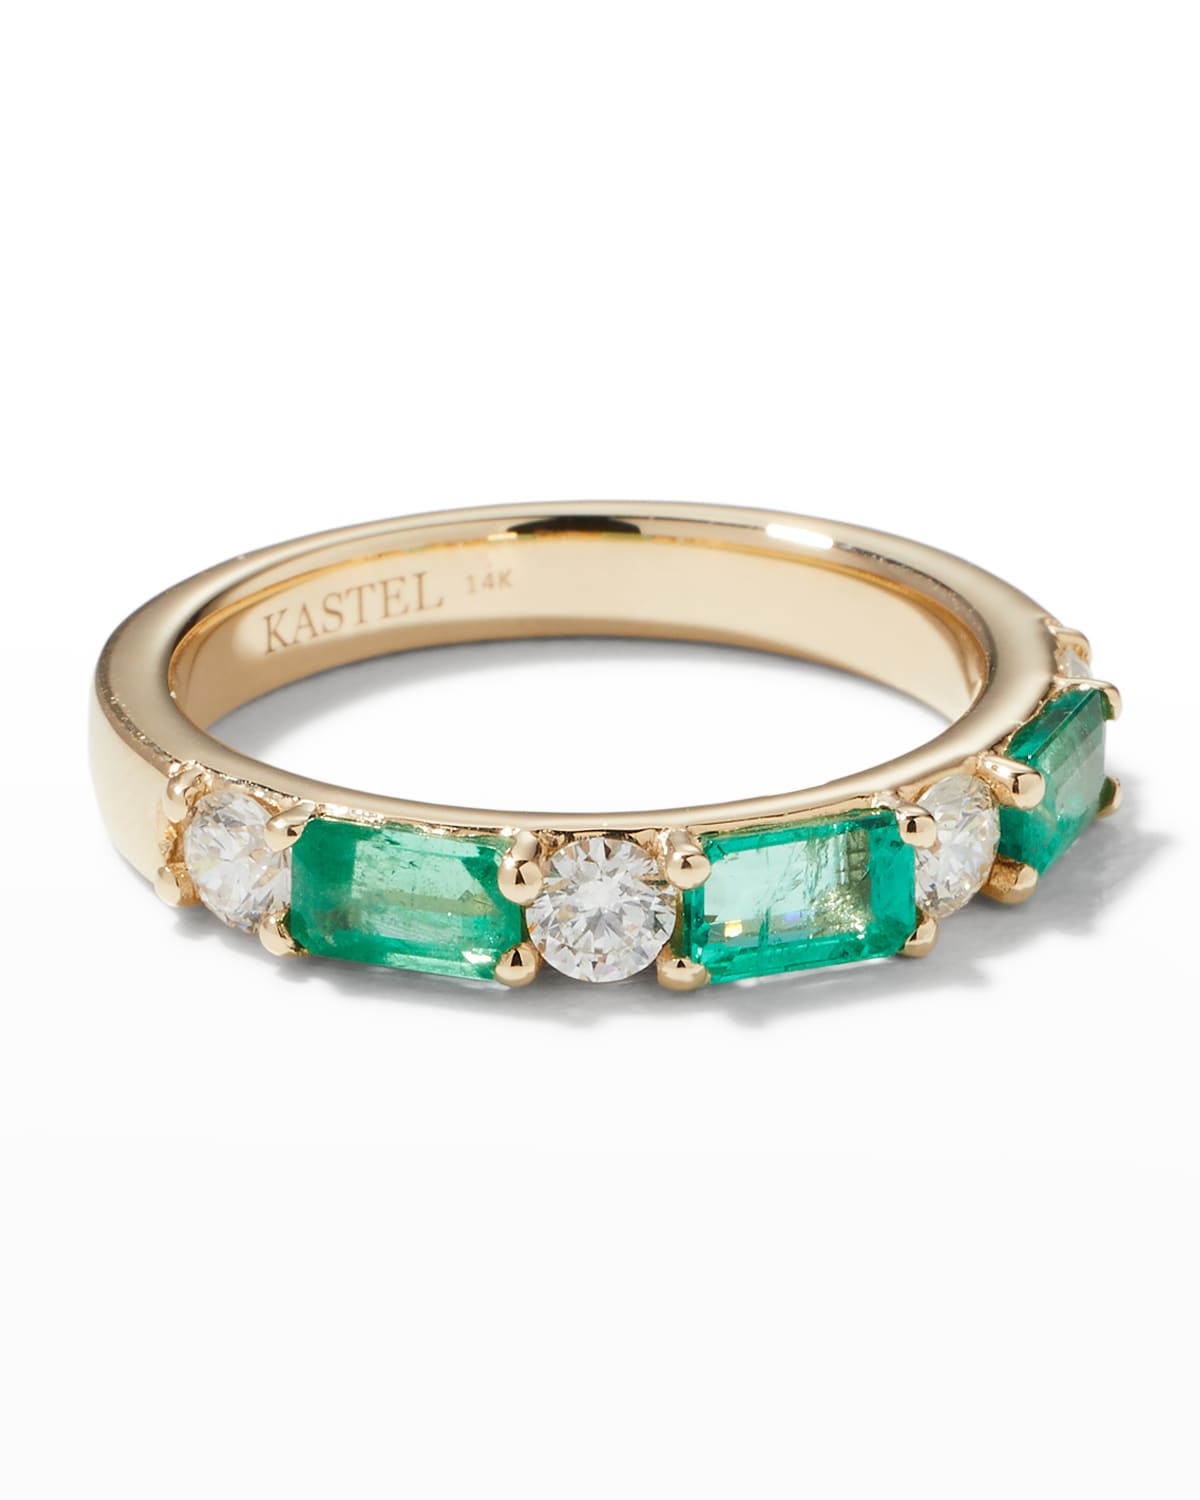 Kastel Jewelry 14k Emerald and Diamond Band Ring, Size 7